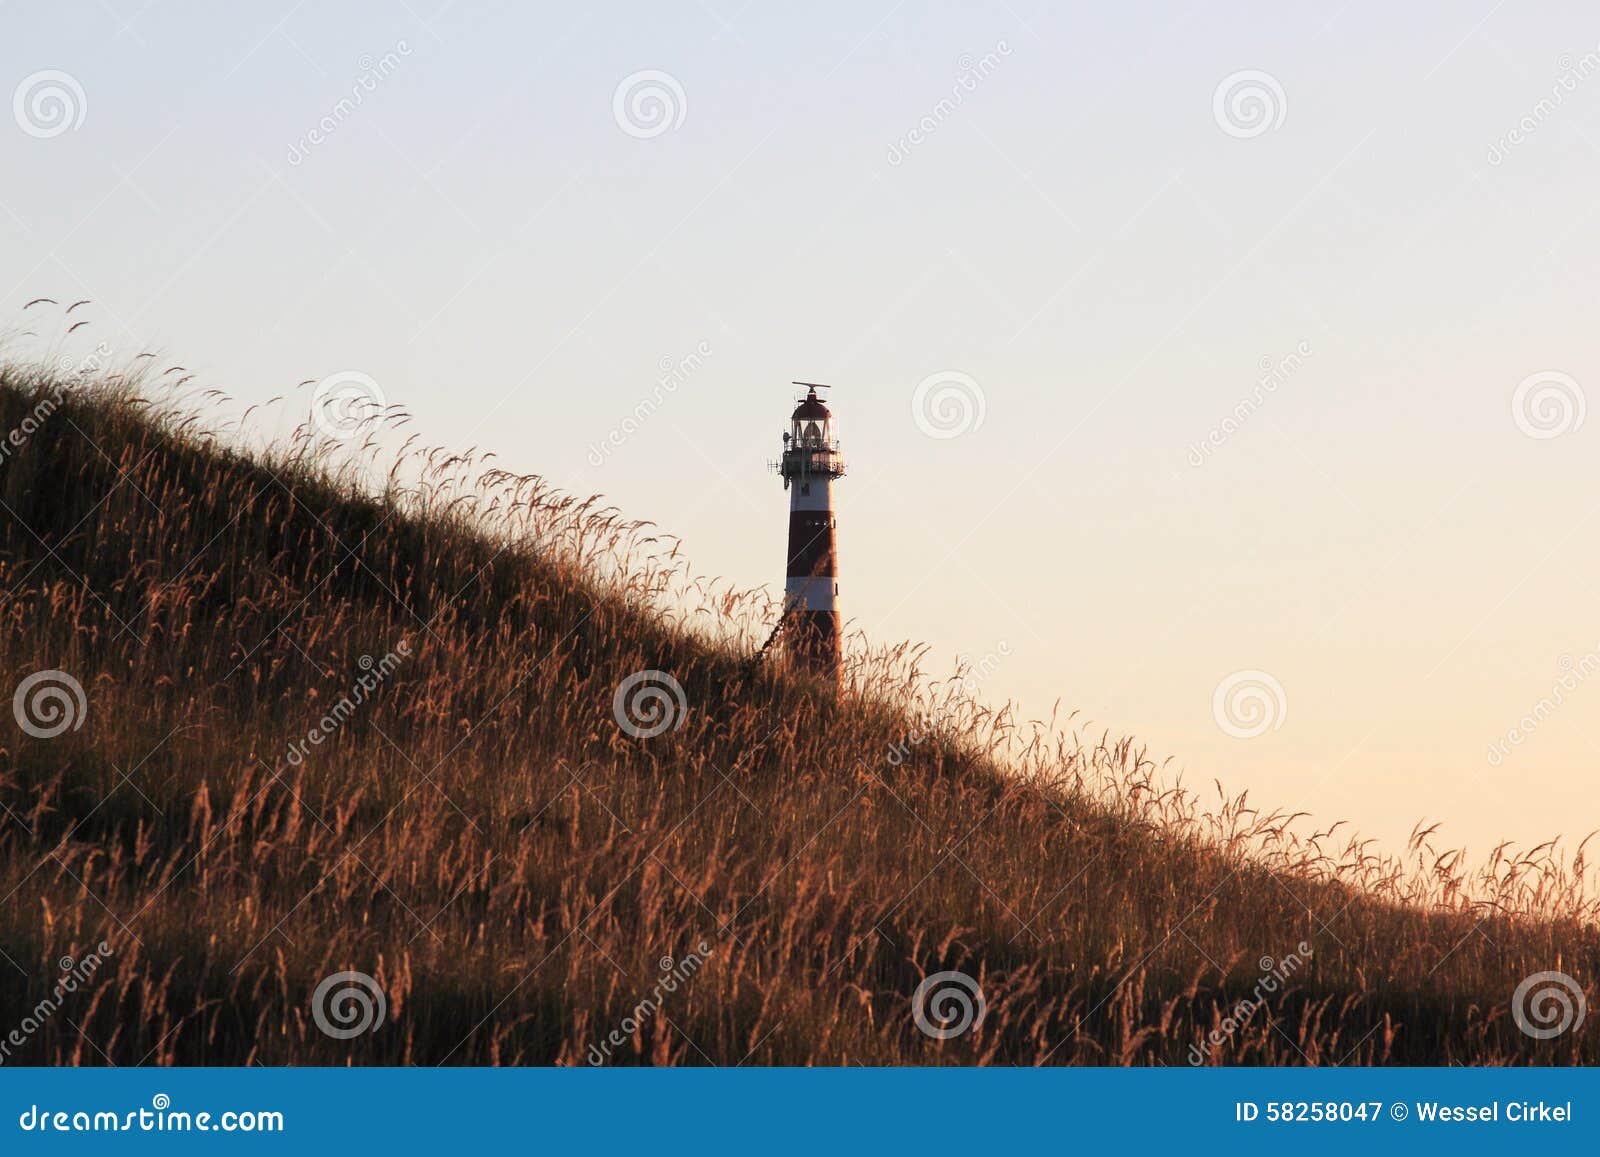 dutch lighthouse bornrif in ameland dunes near hollum